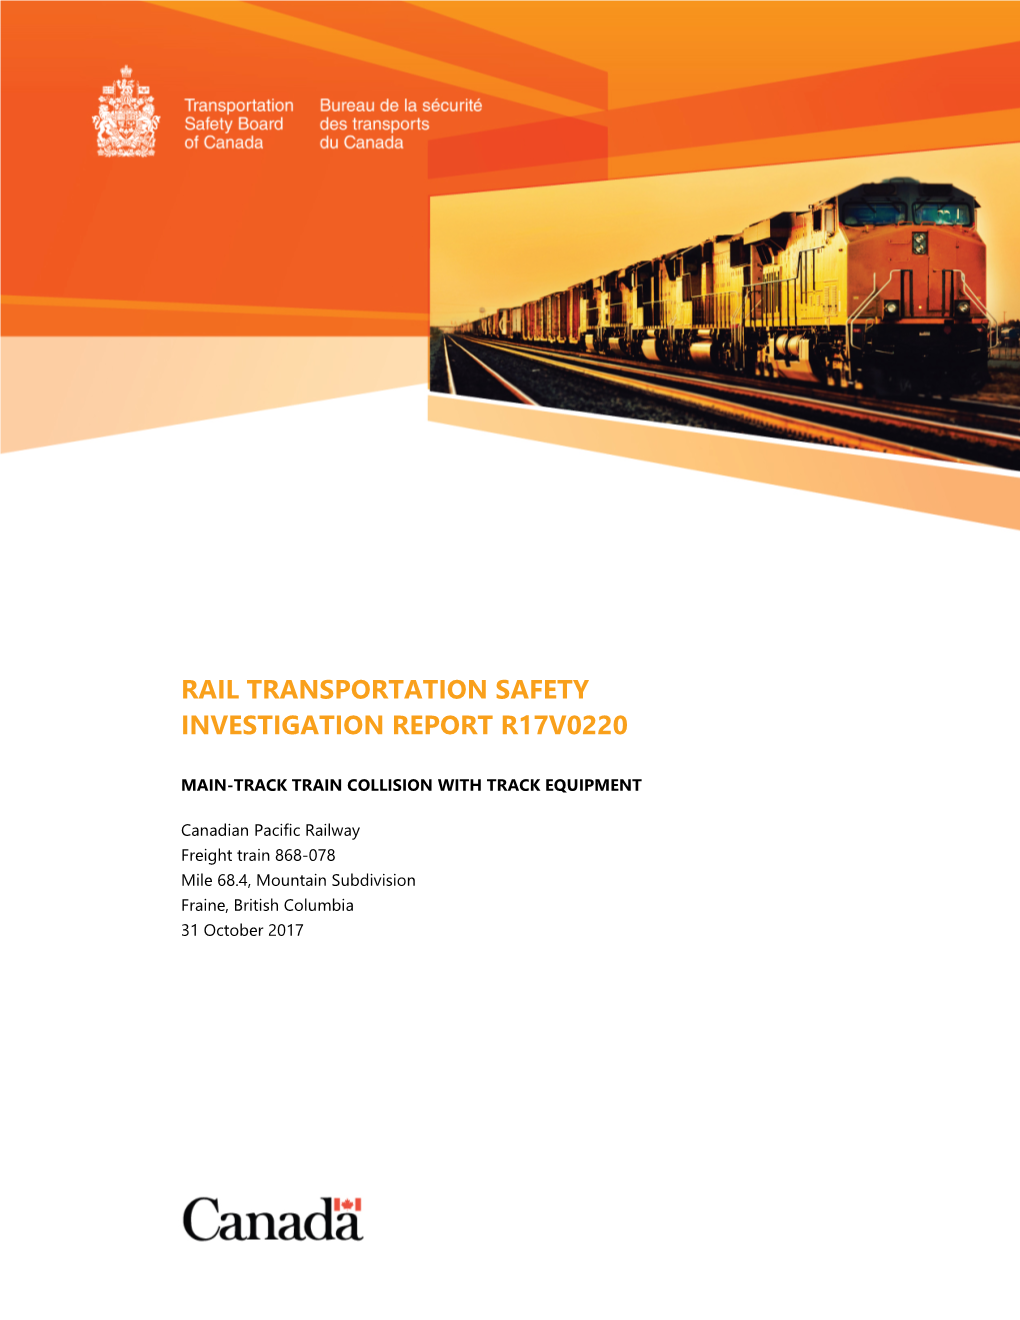 Rail Transportation Safety Investigation Report R17v0220